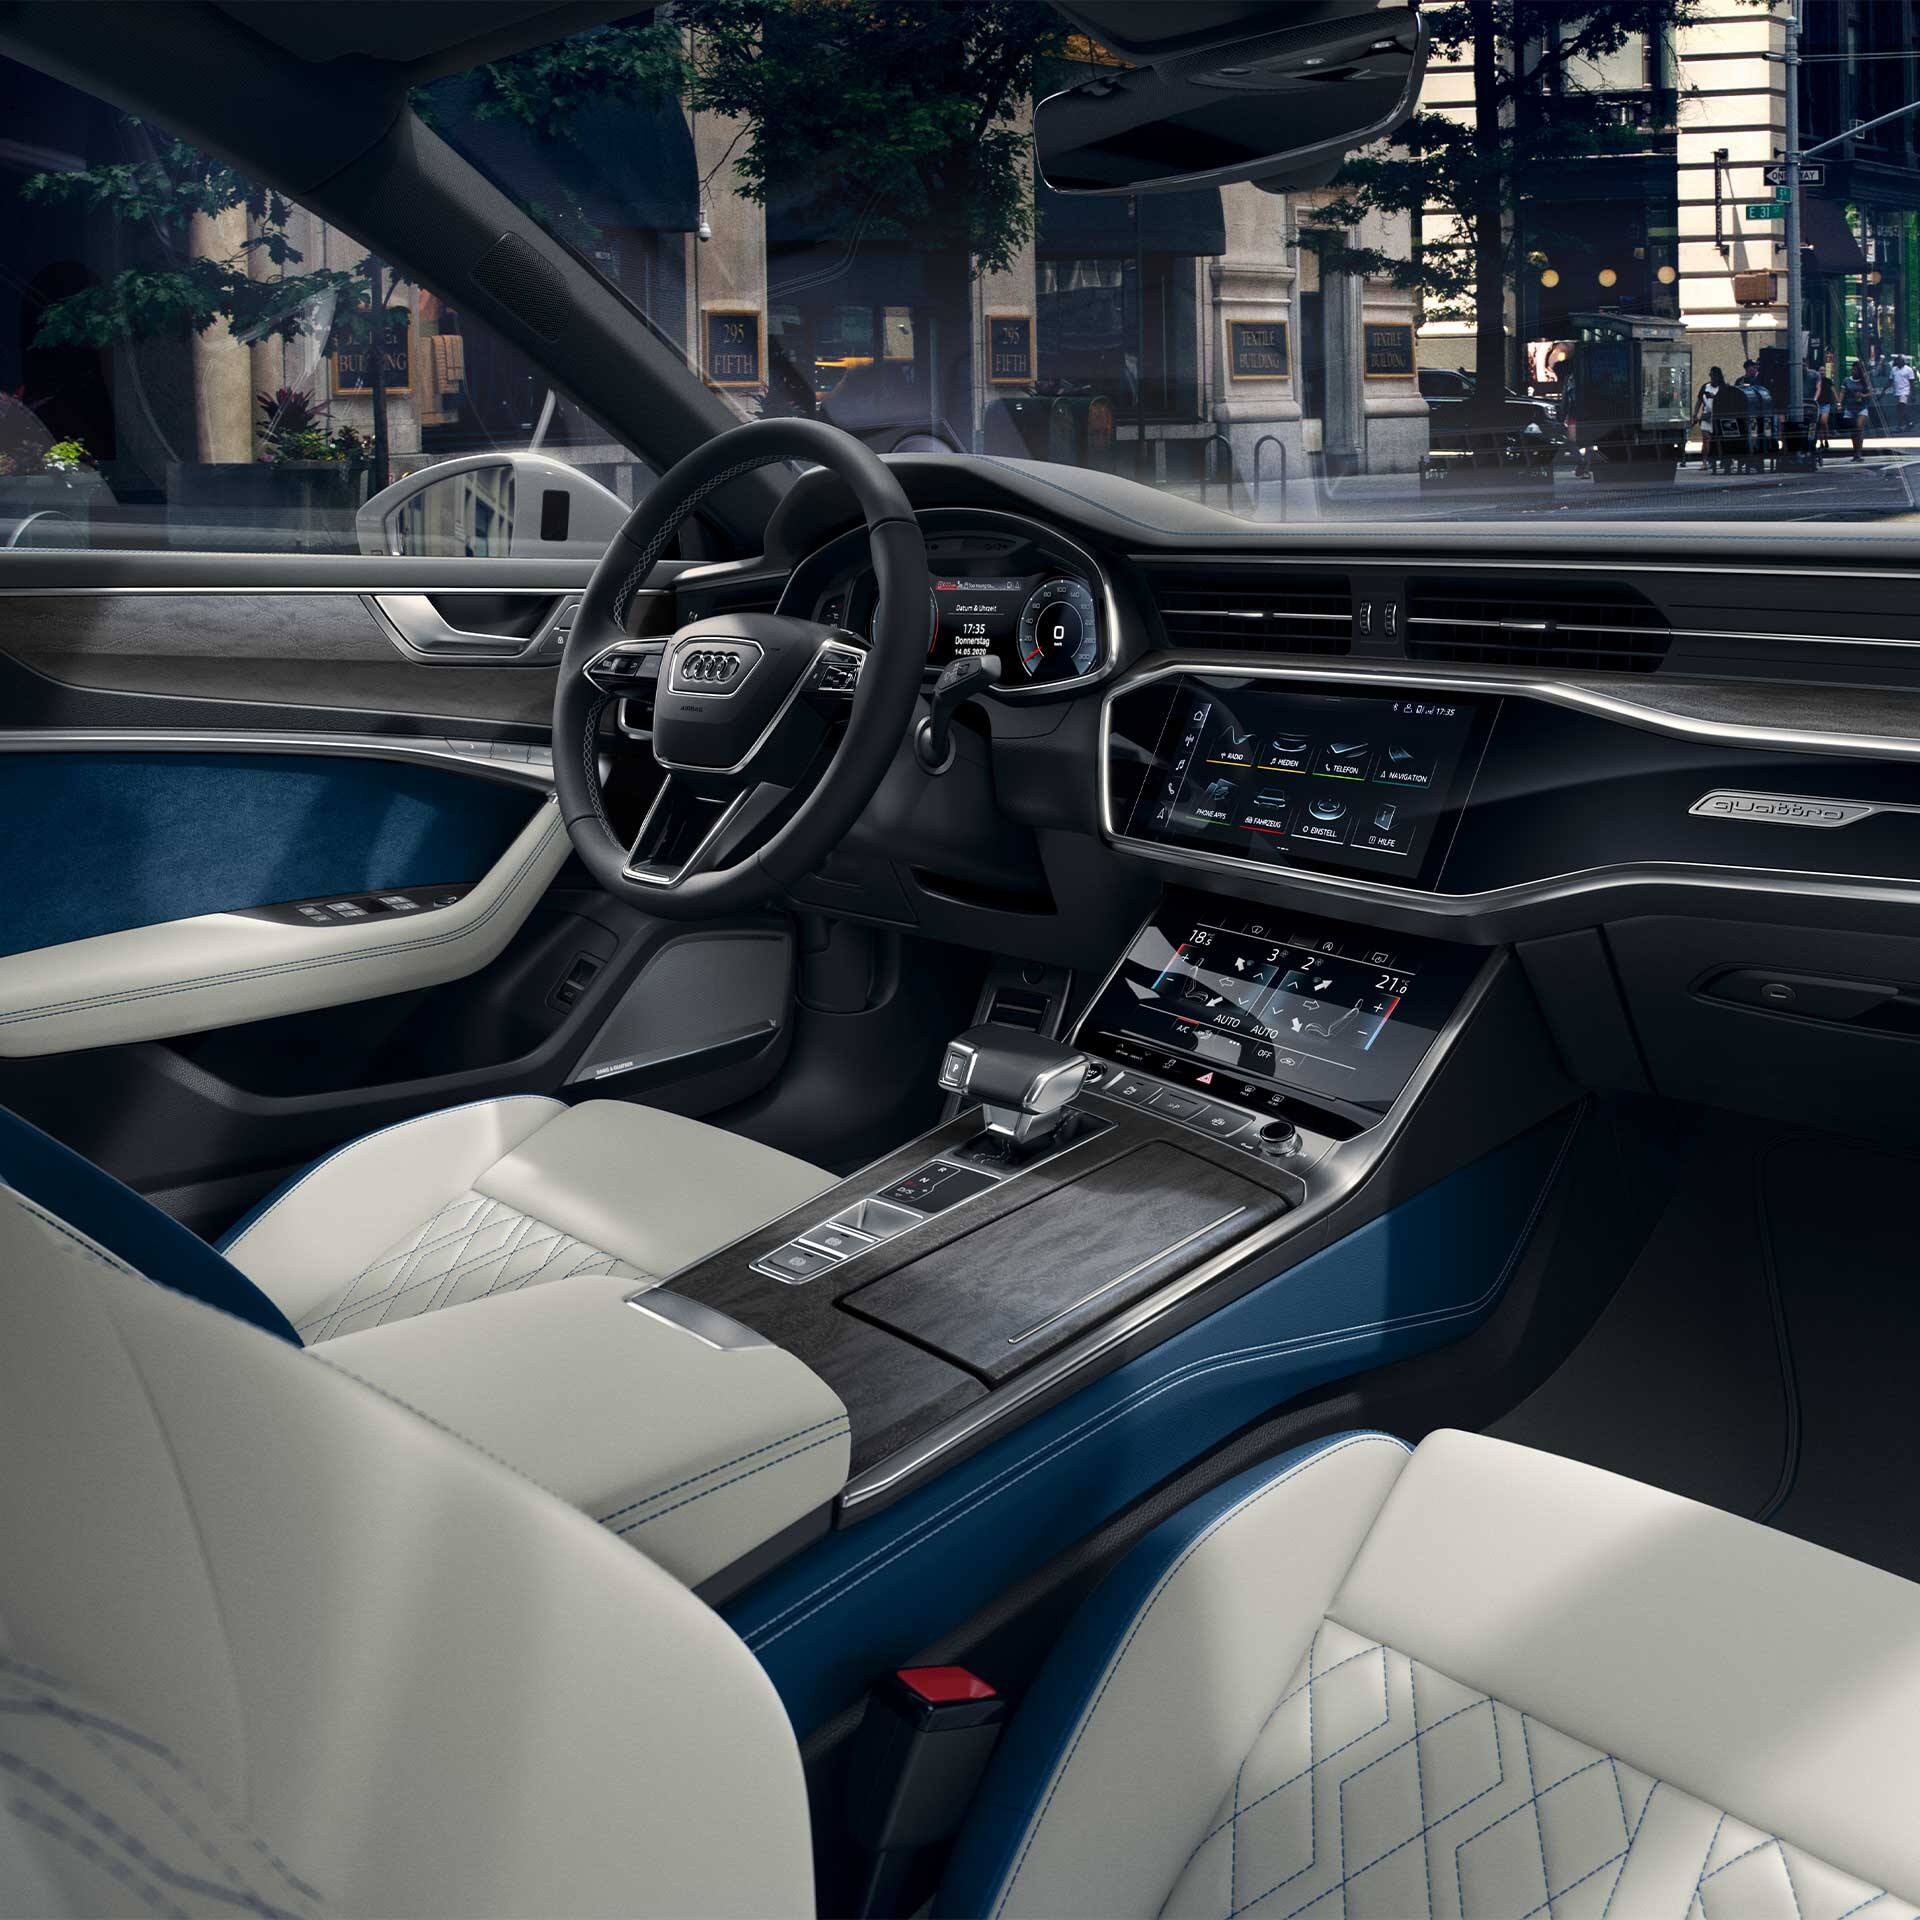 Interior Audi A7 Sprtback cu capitonaj Audi exclusive